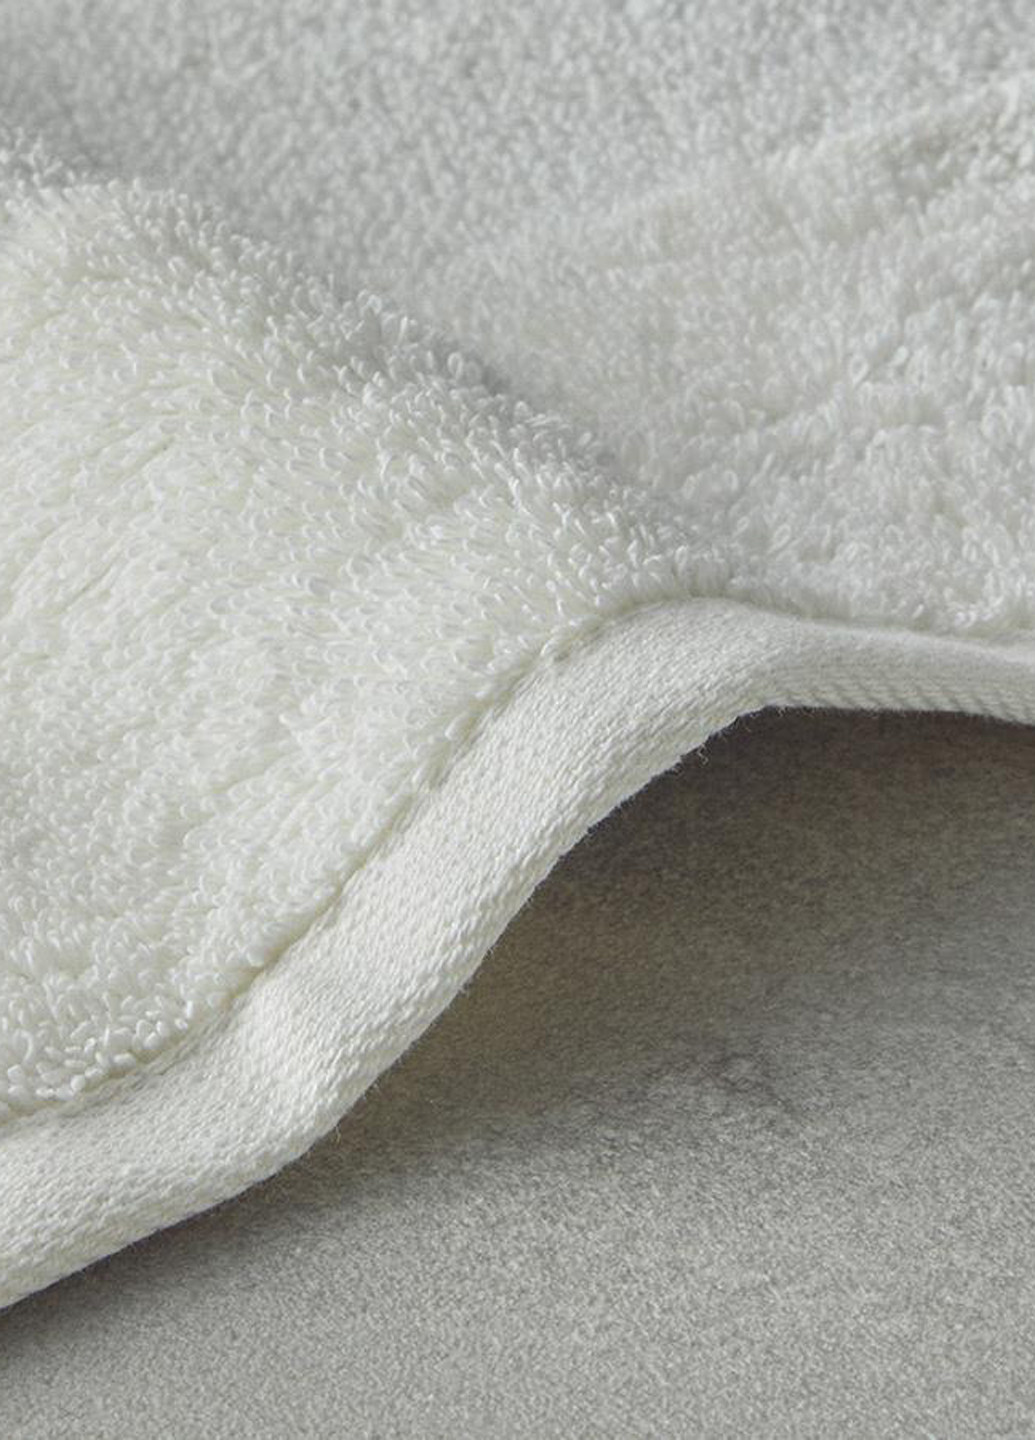 English Home полотенце для лица, 50х80 см однотонный белый производство - Турция